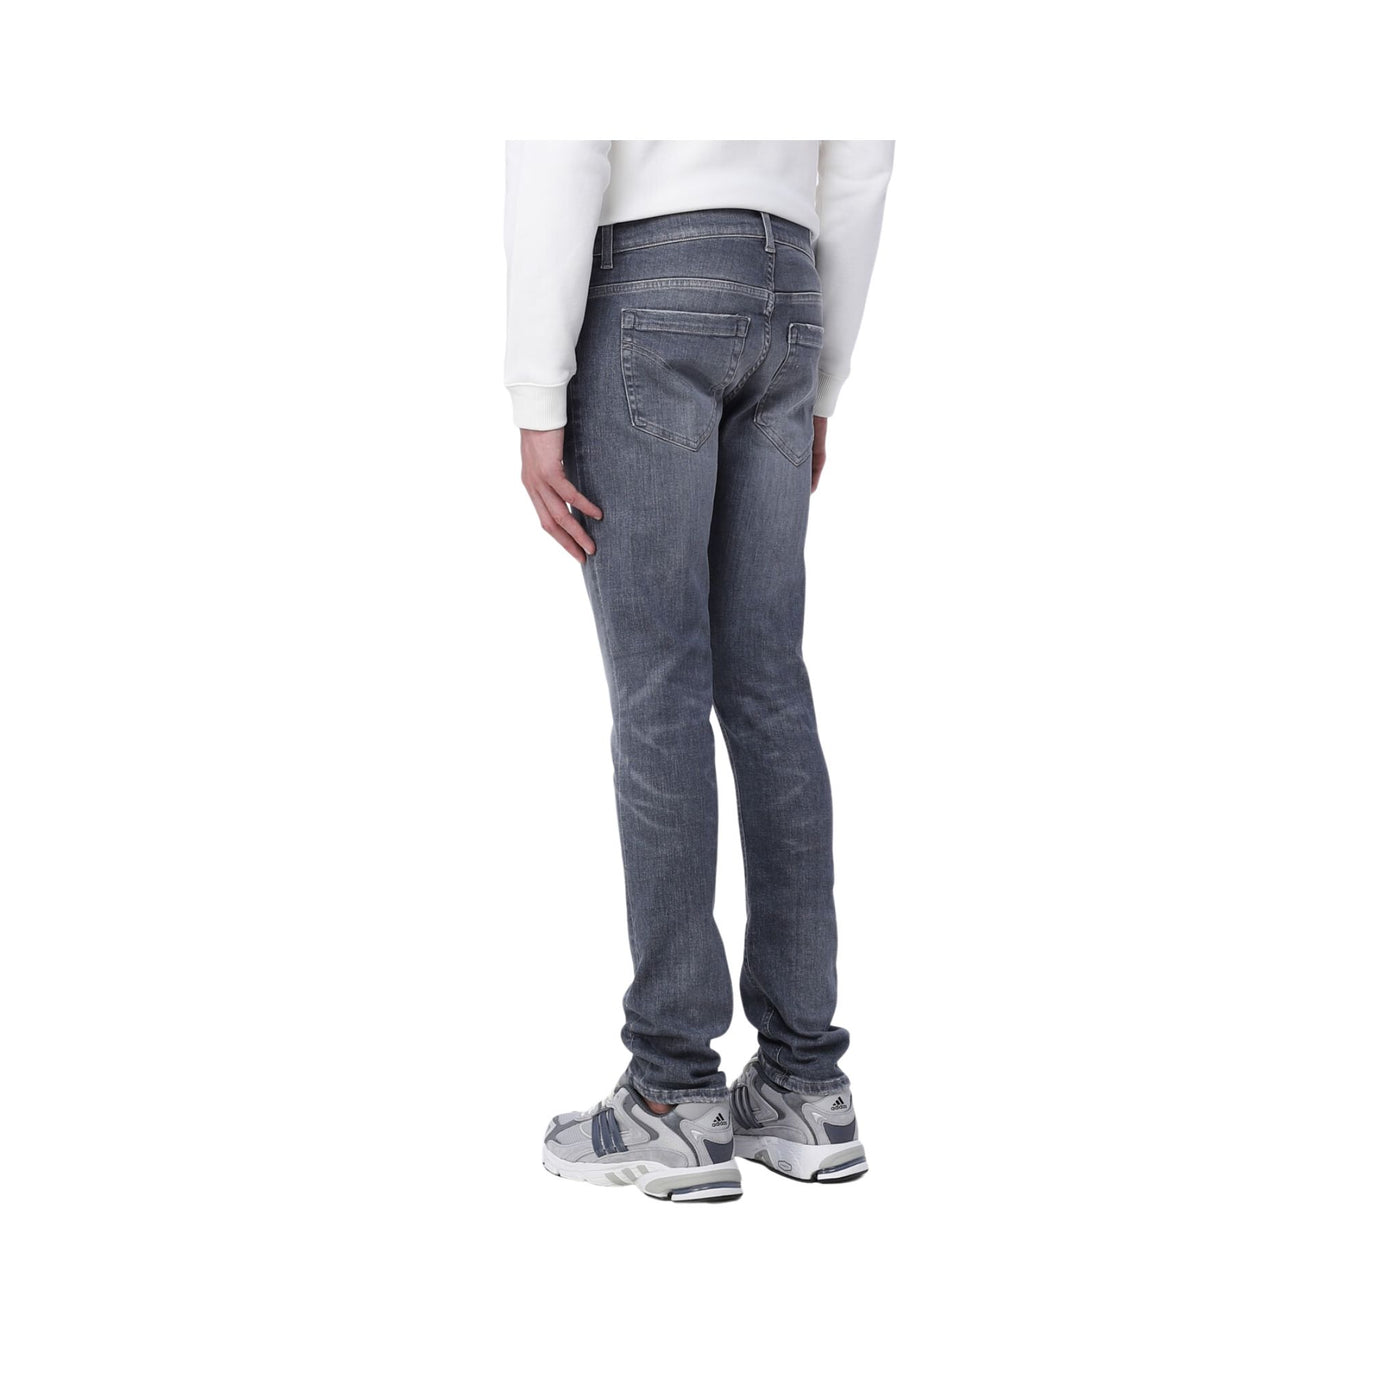 Men's low-waisted five-pocket jeans